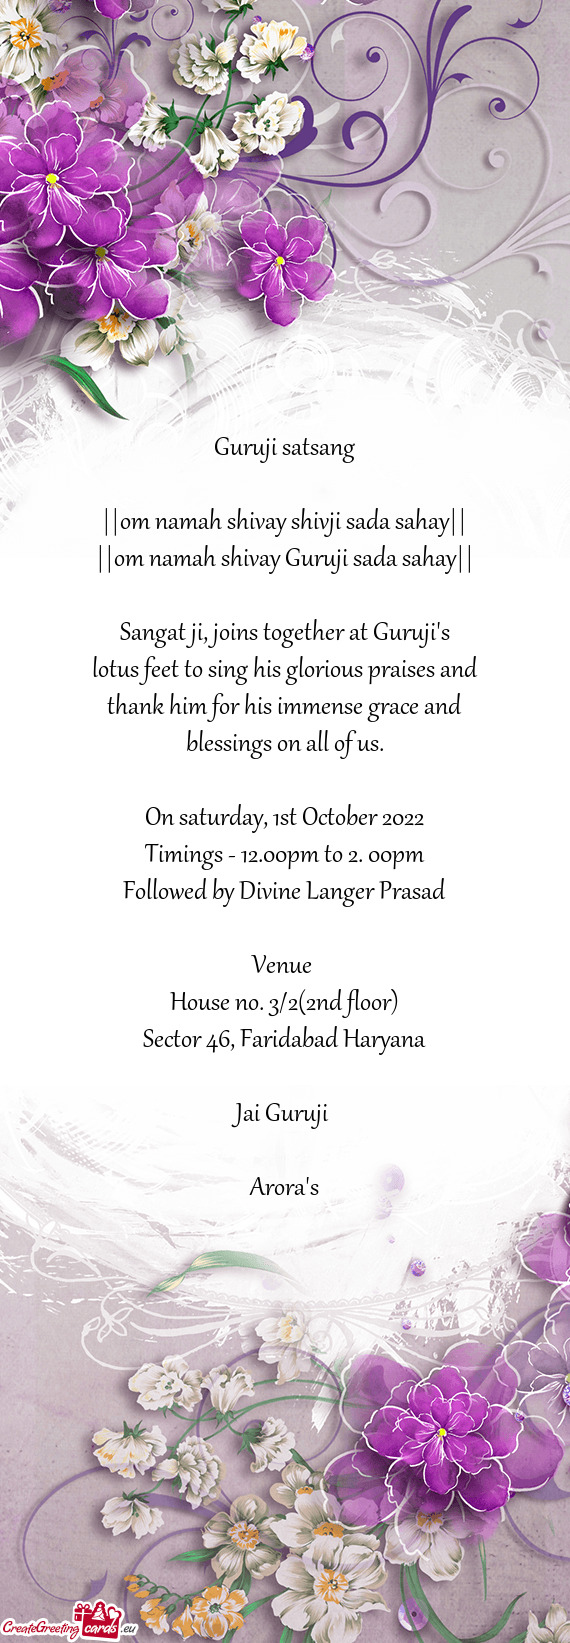 Sangat ji, joins together at Guruji